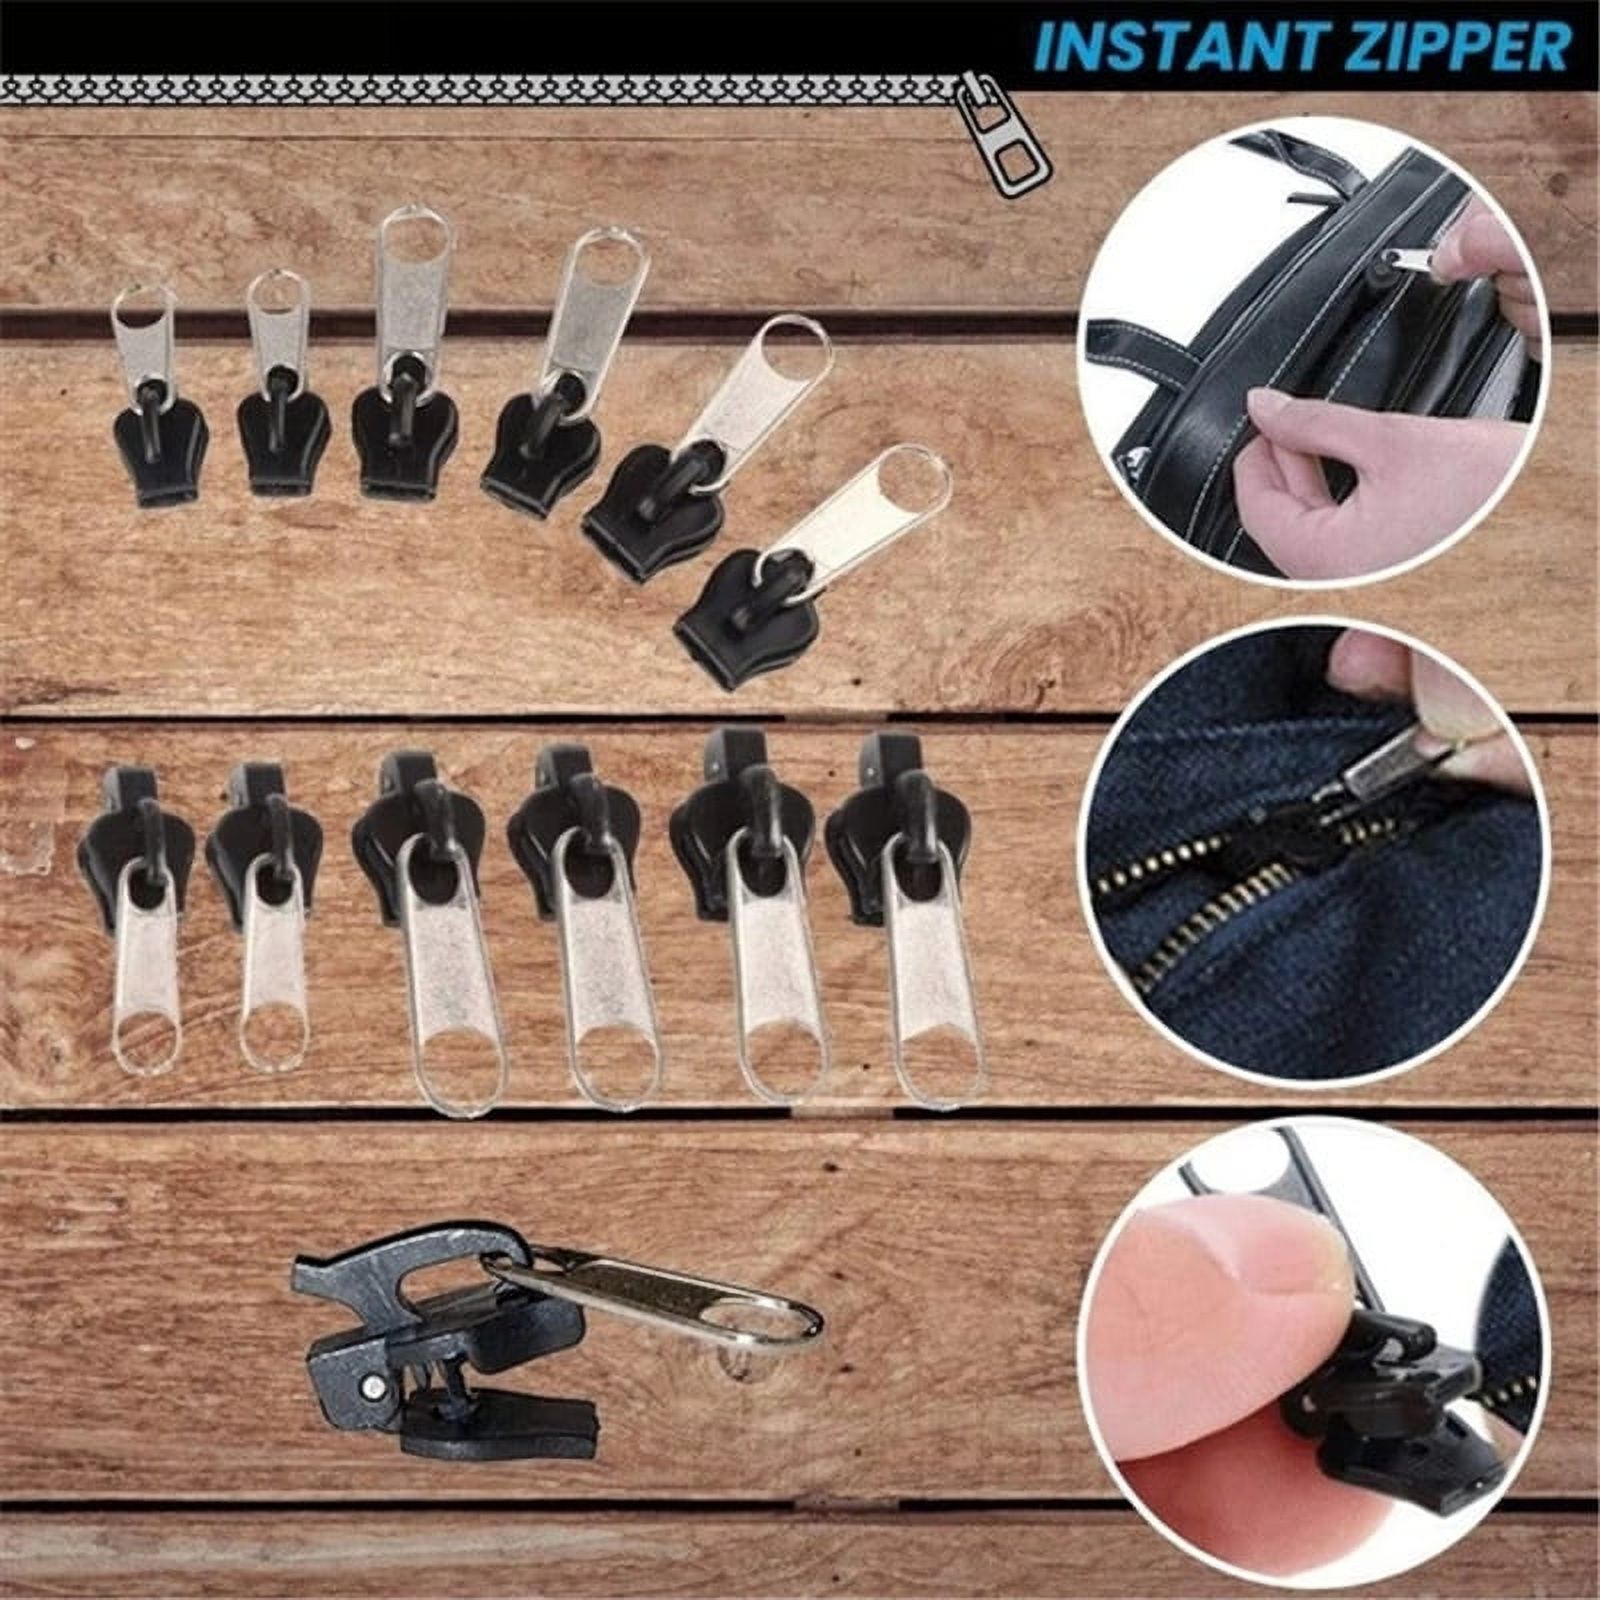 Instant Zipper Set of 6 Universal Zipper Replacement in 3 Sizes No